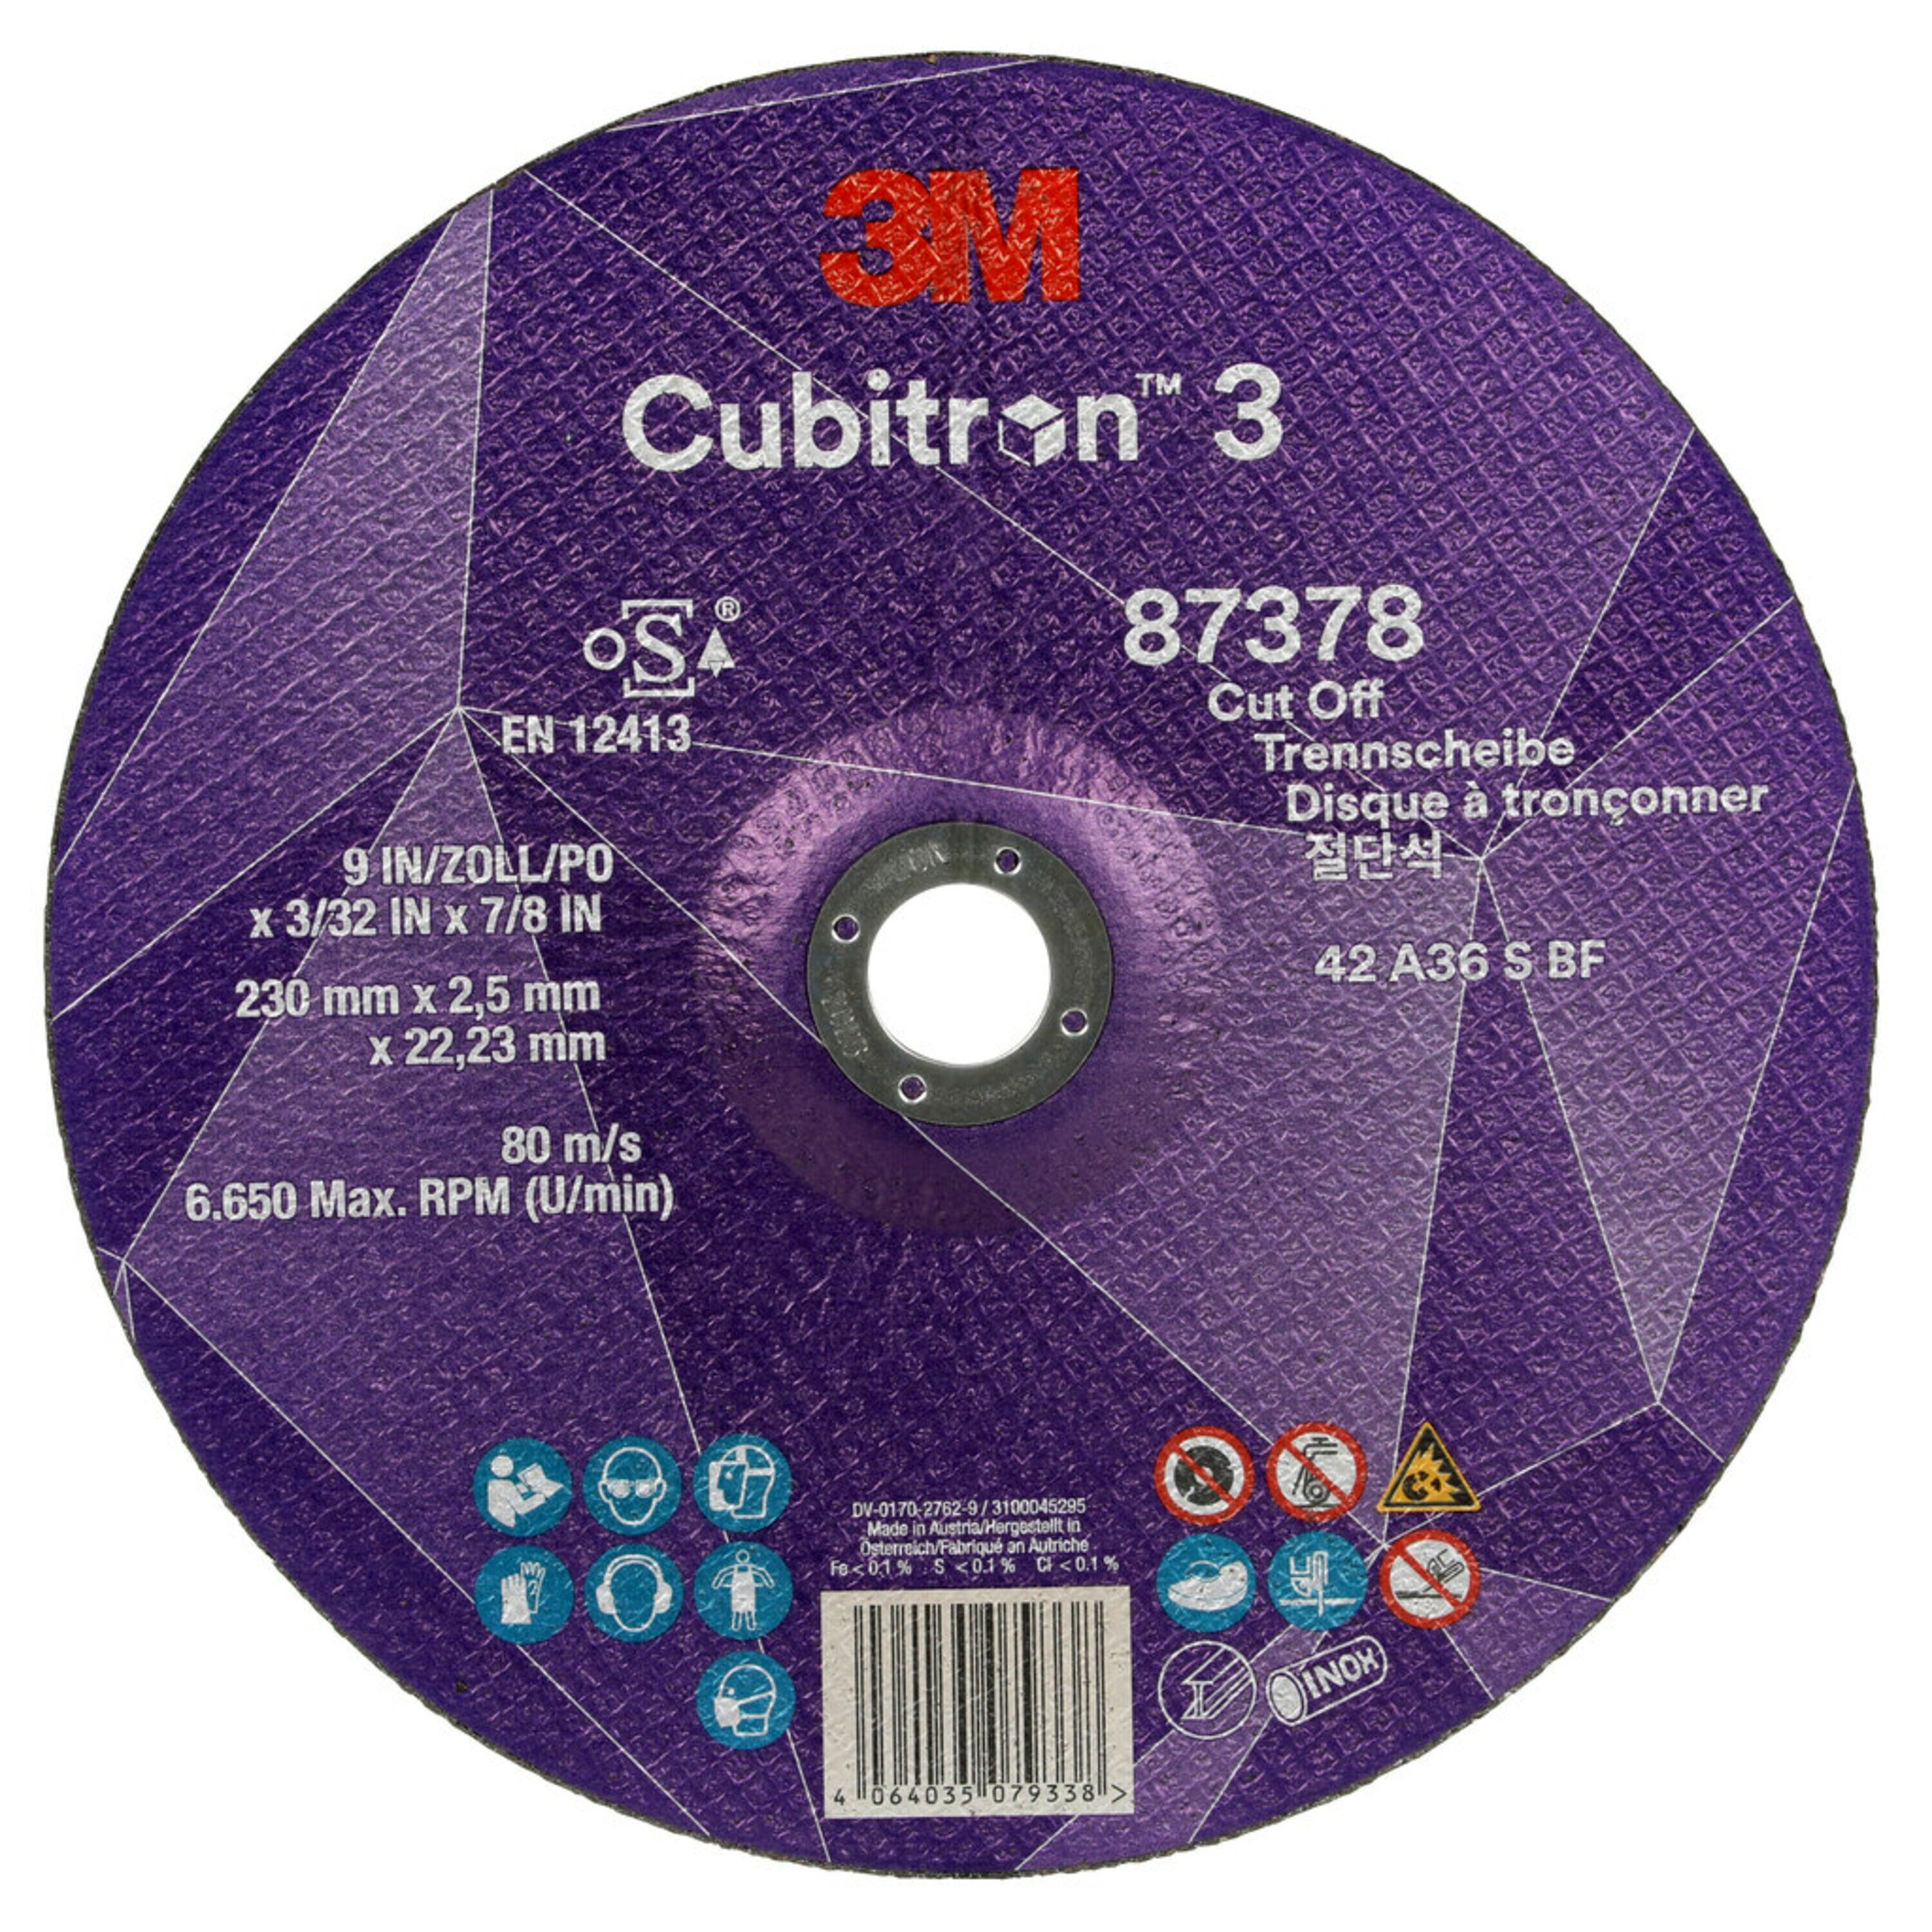 3M Cubitron 3 cut-off wheel, 230 mm, 2.5 mm, 22.23 mm, 36+, type 42 #87378